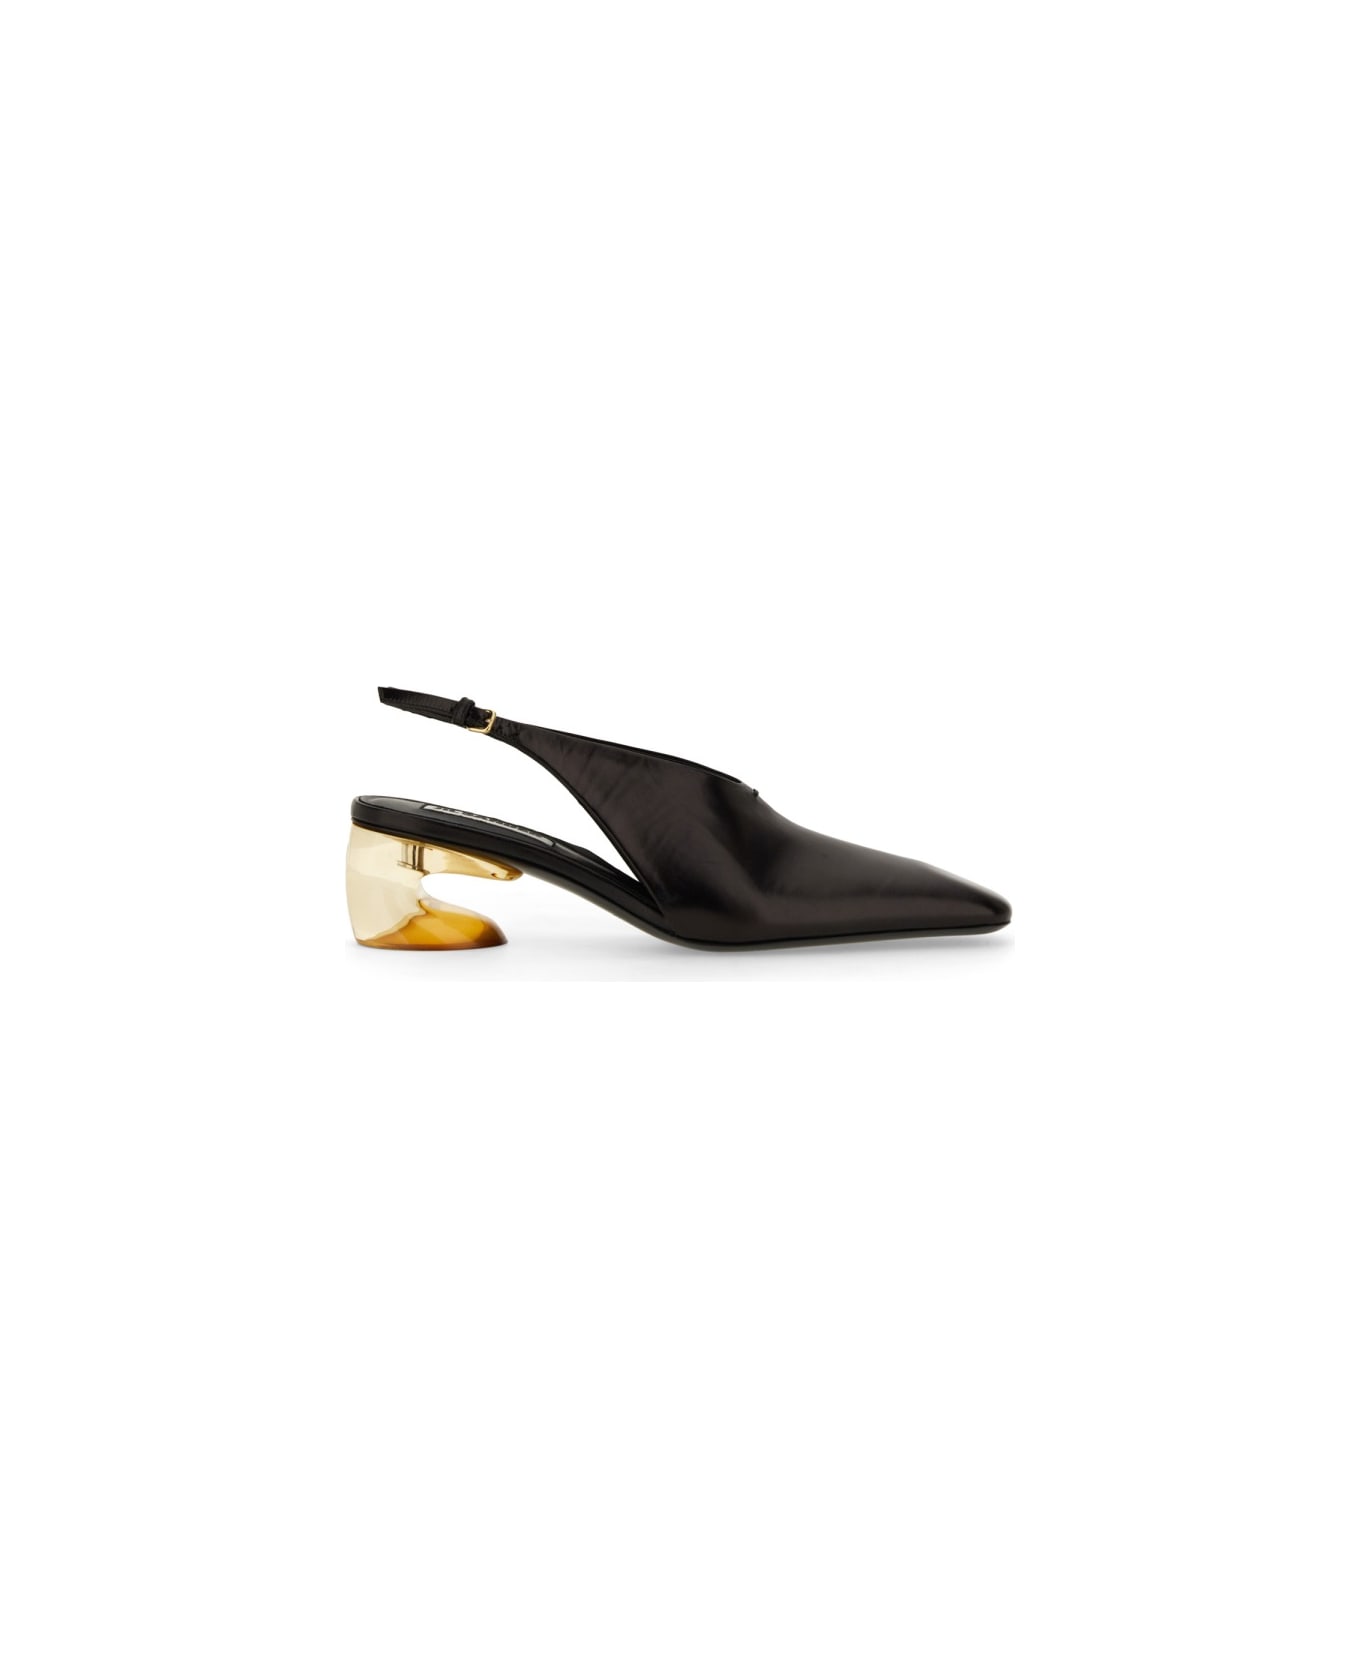 Jil Sander Pumps With Contrasting Heels - BLACK サンダル